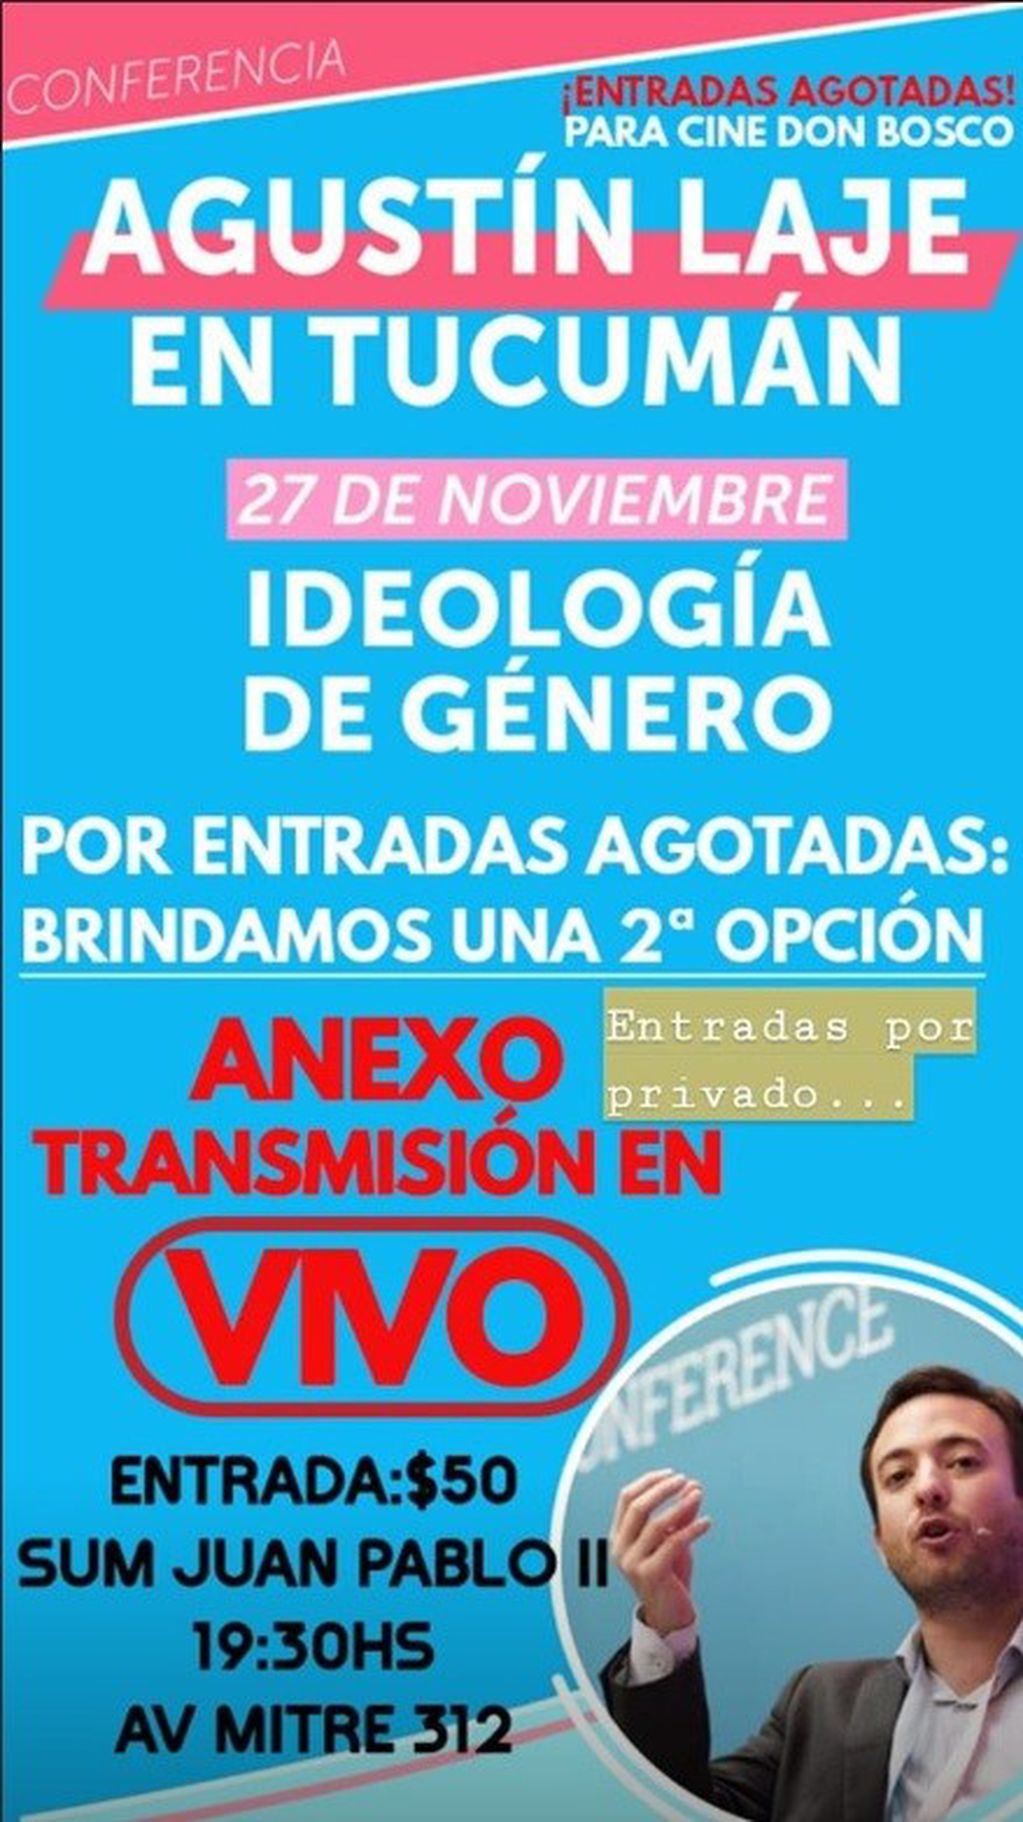 Agustín Laje disertará sobre "Ideología de Género" en Tucumán